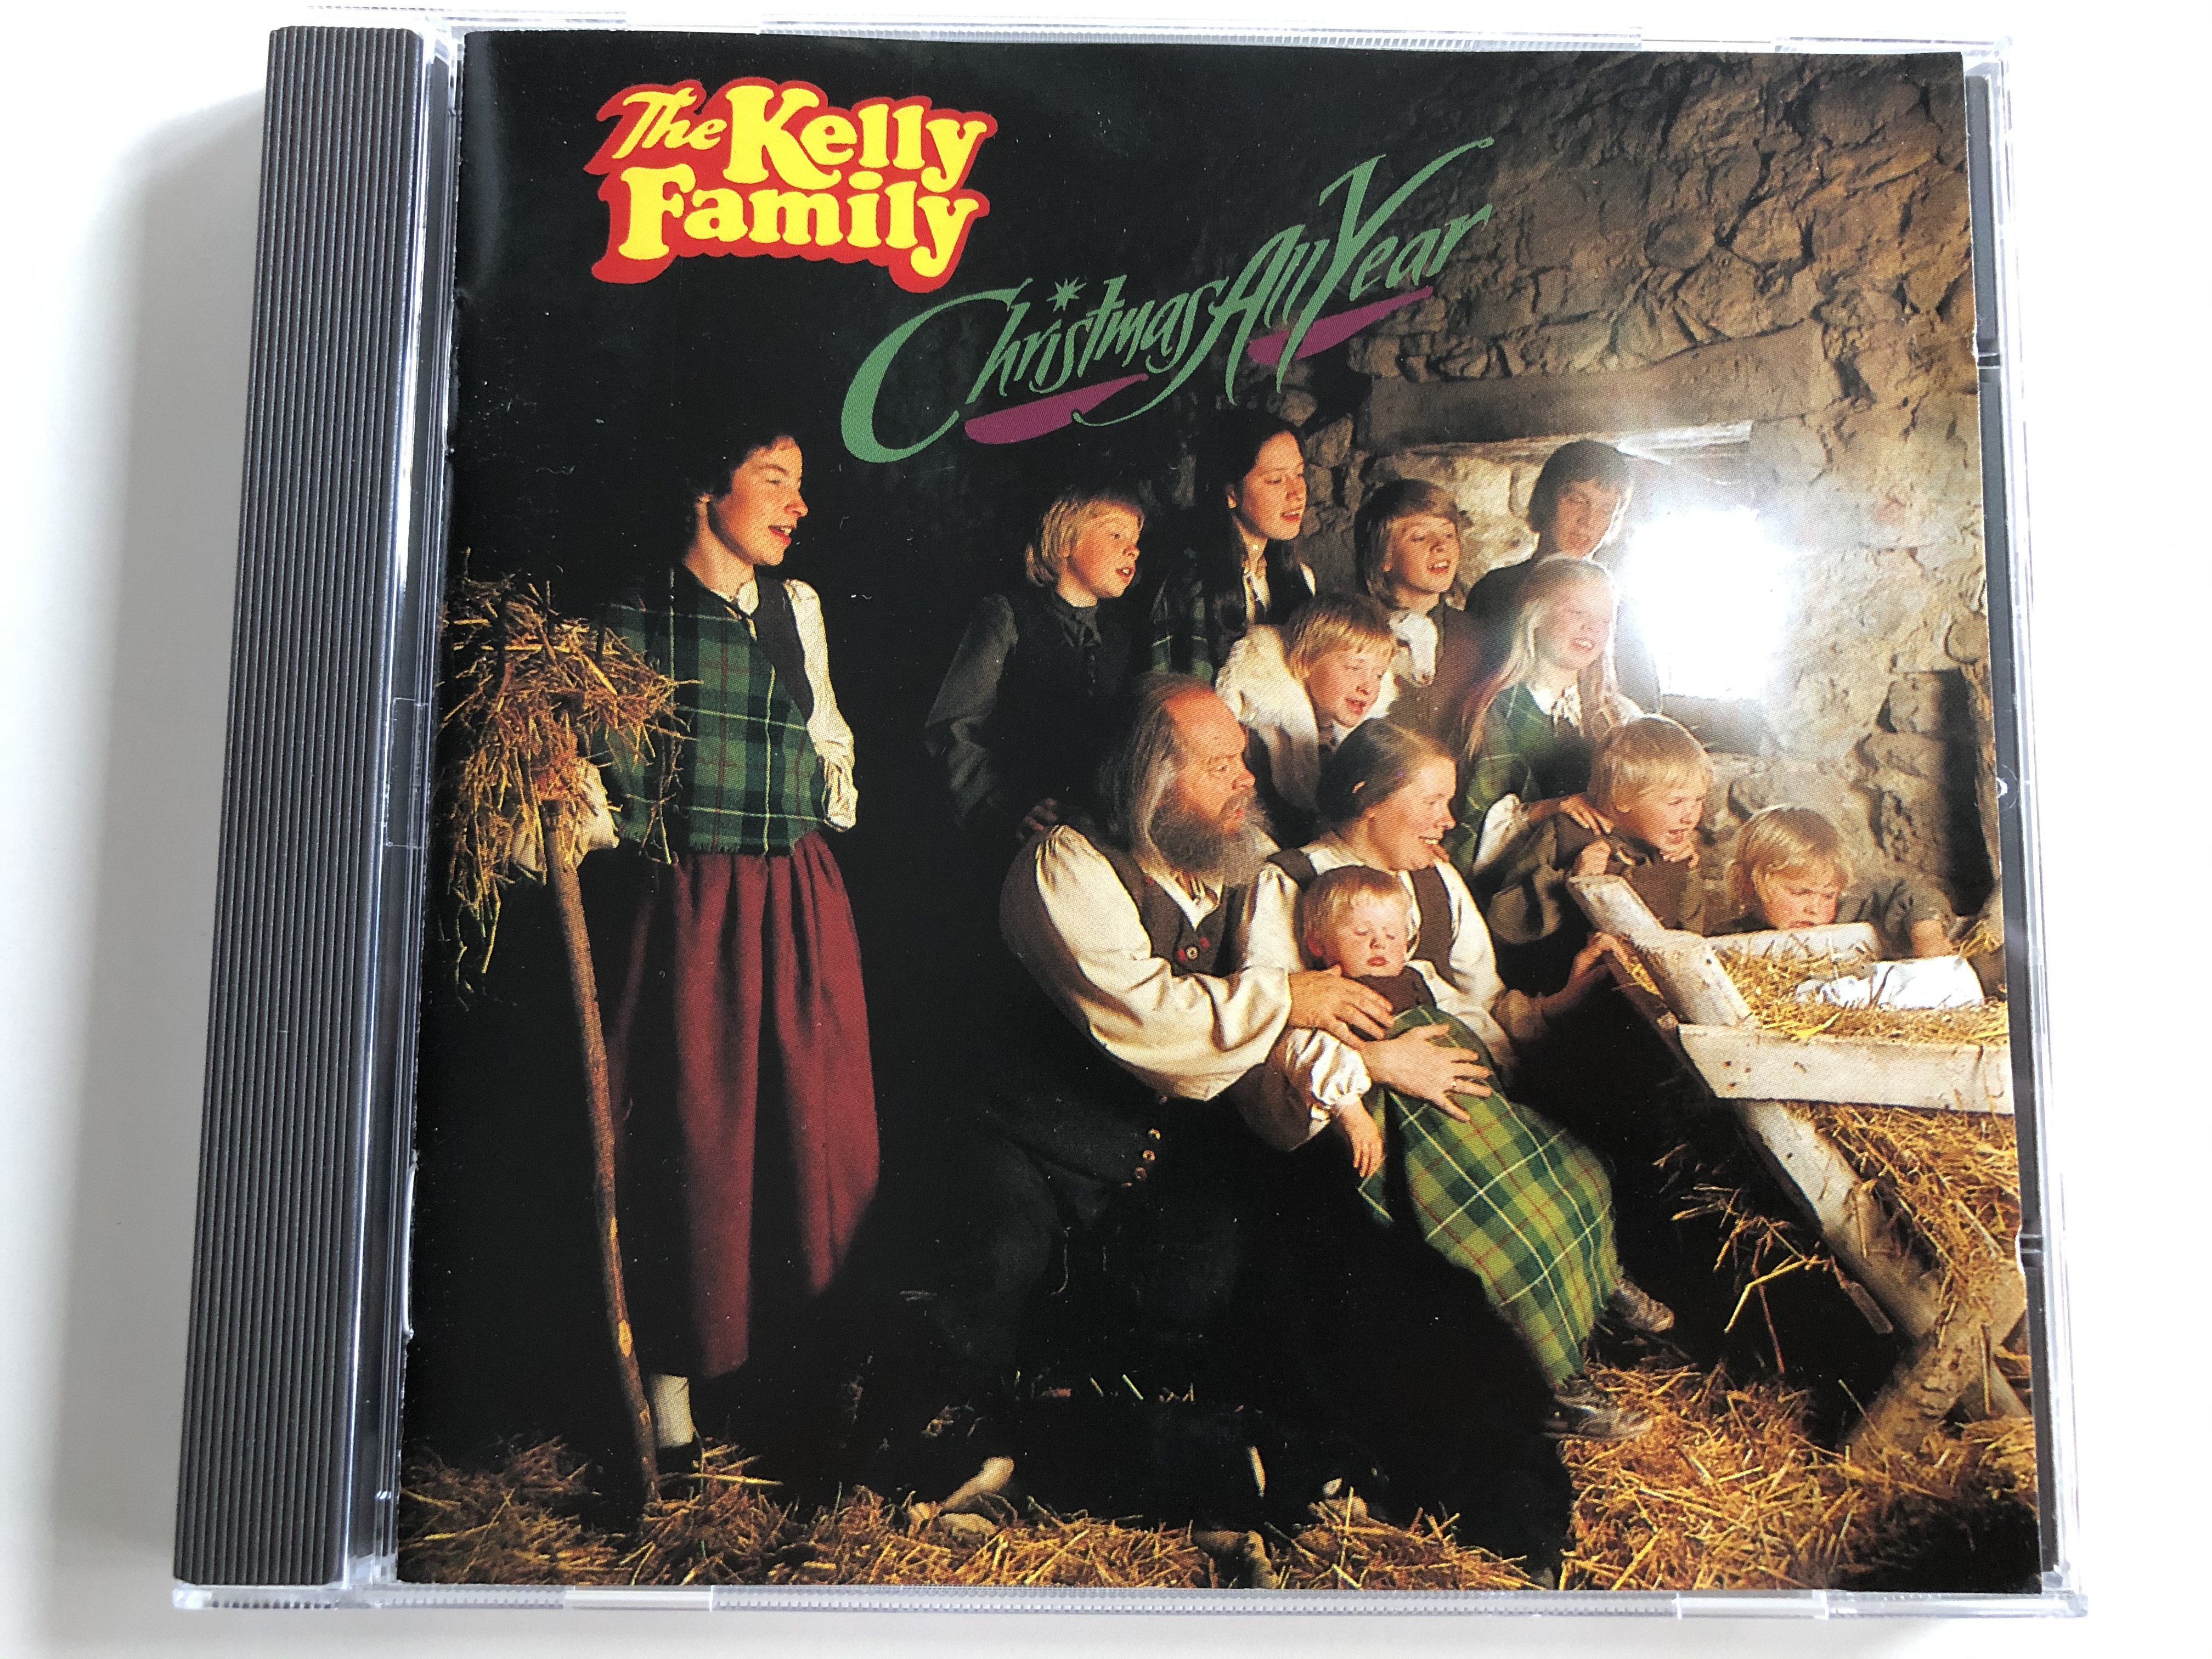 the-kelly-family-christmas-all-year-kel-life-audio-cd-stereo-724383641123-1-.jpg